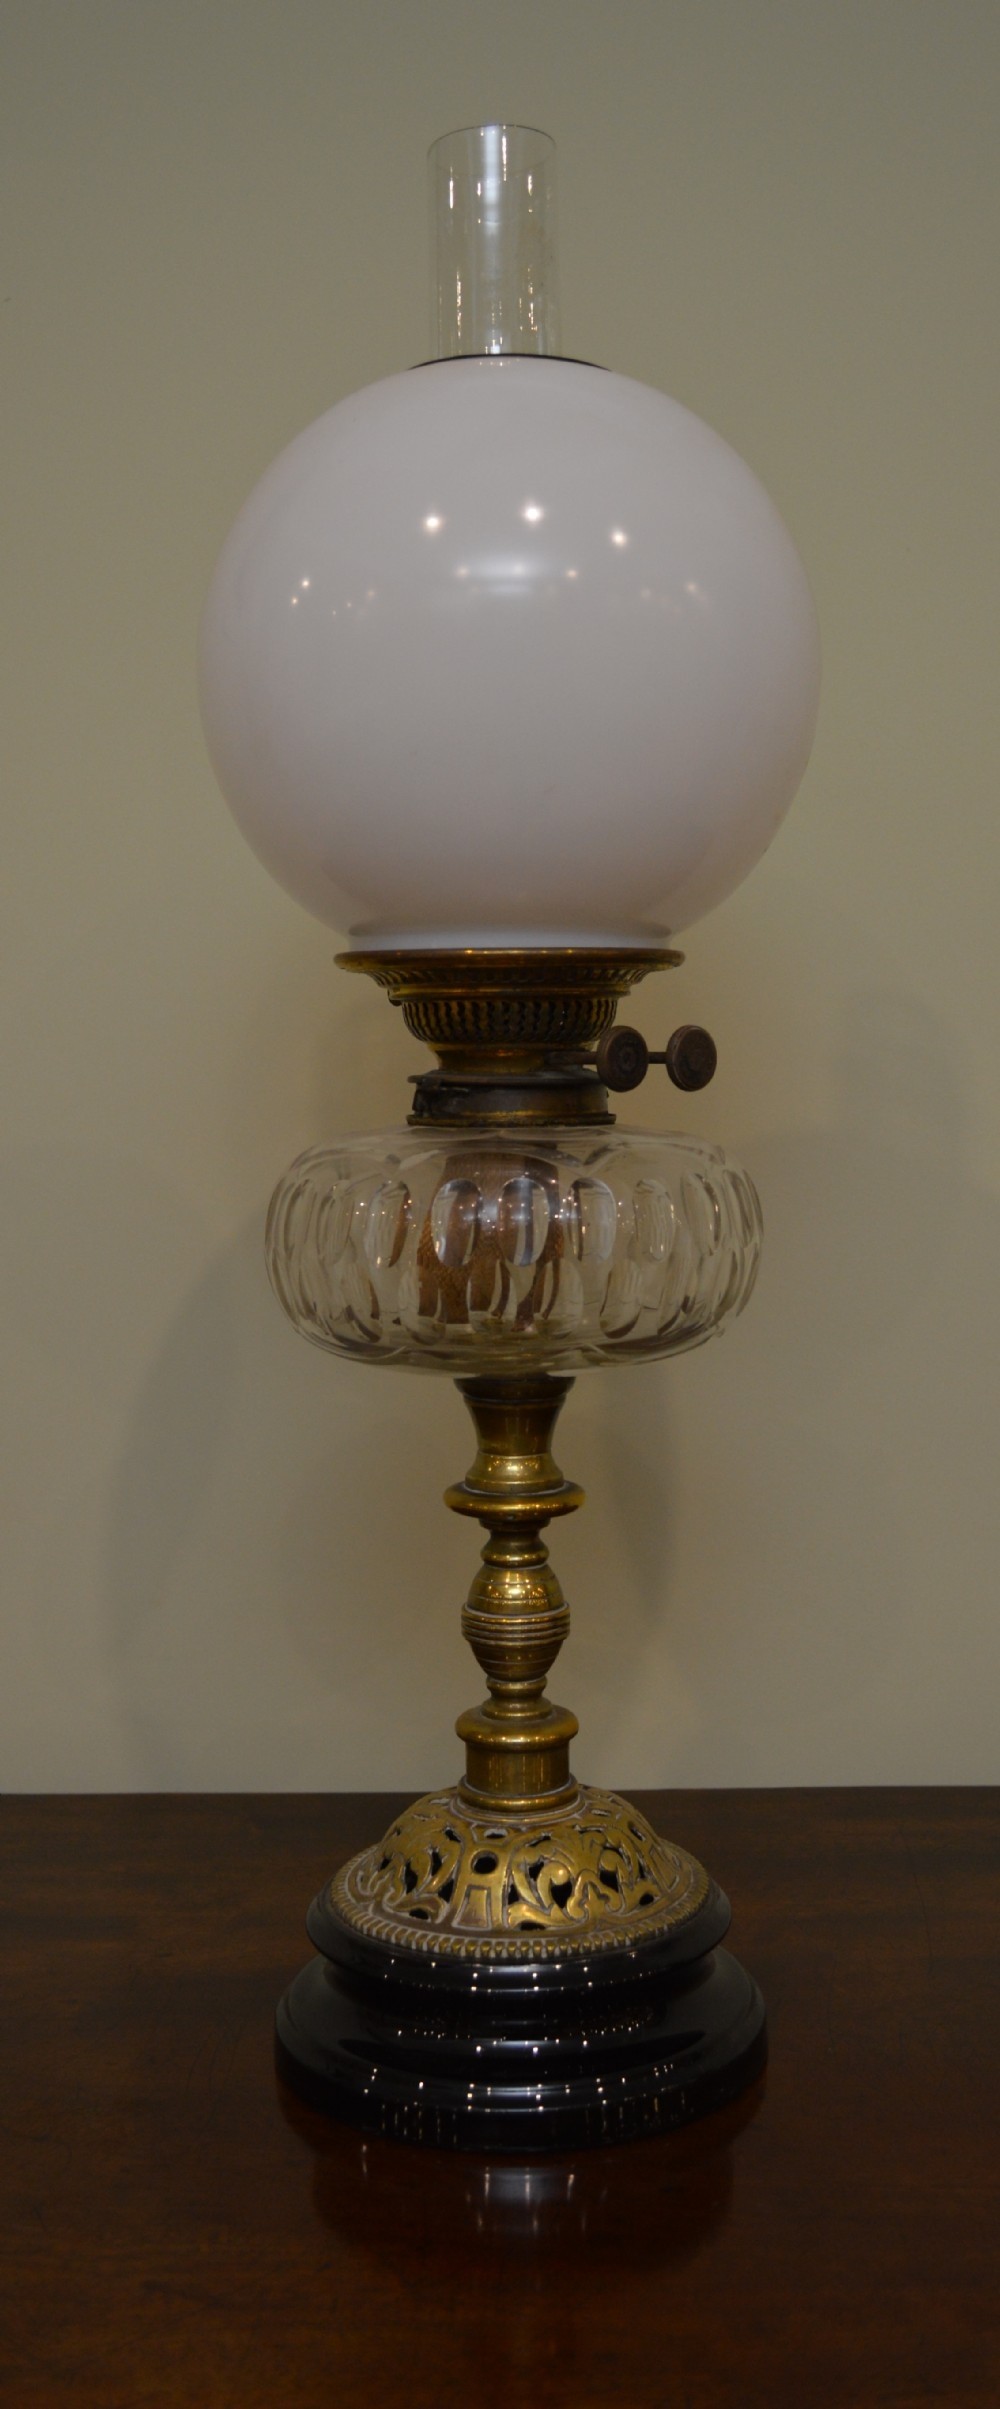 10 benefits of antique globe lamps warisan lighting 6